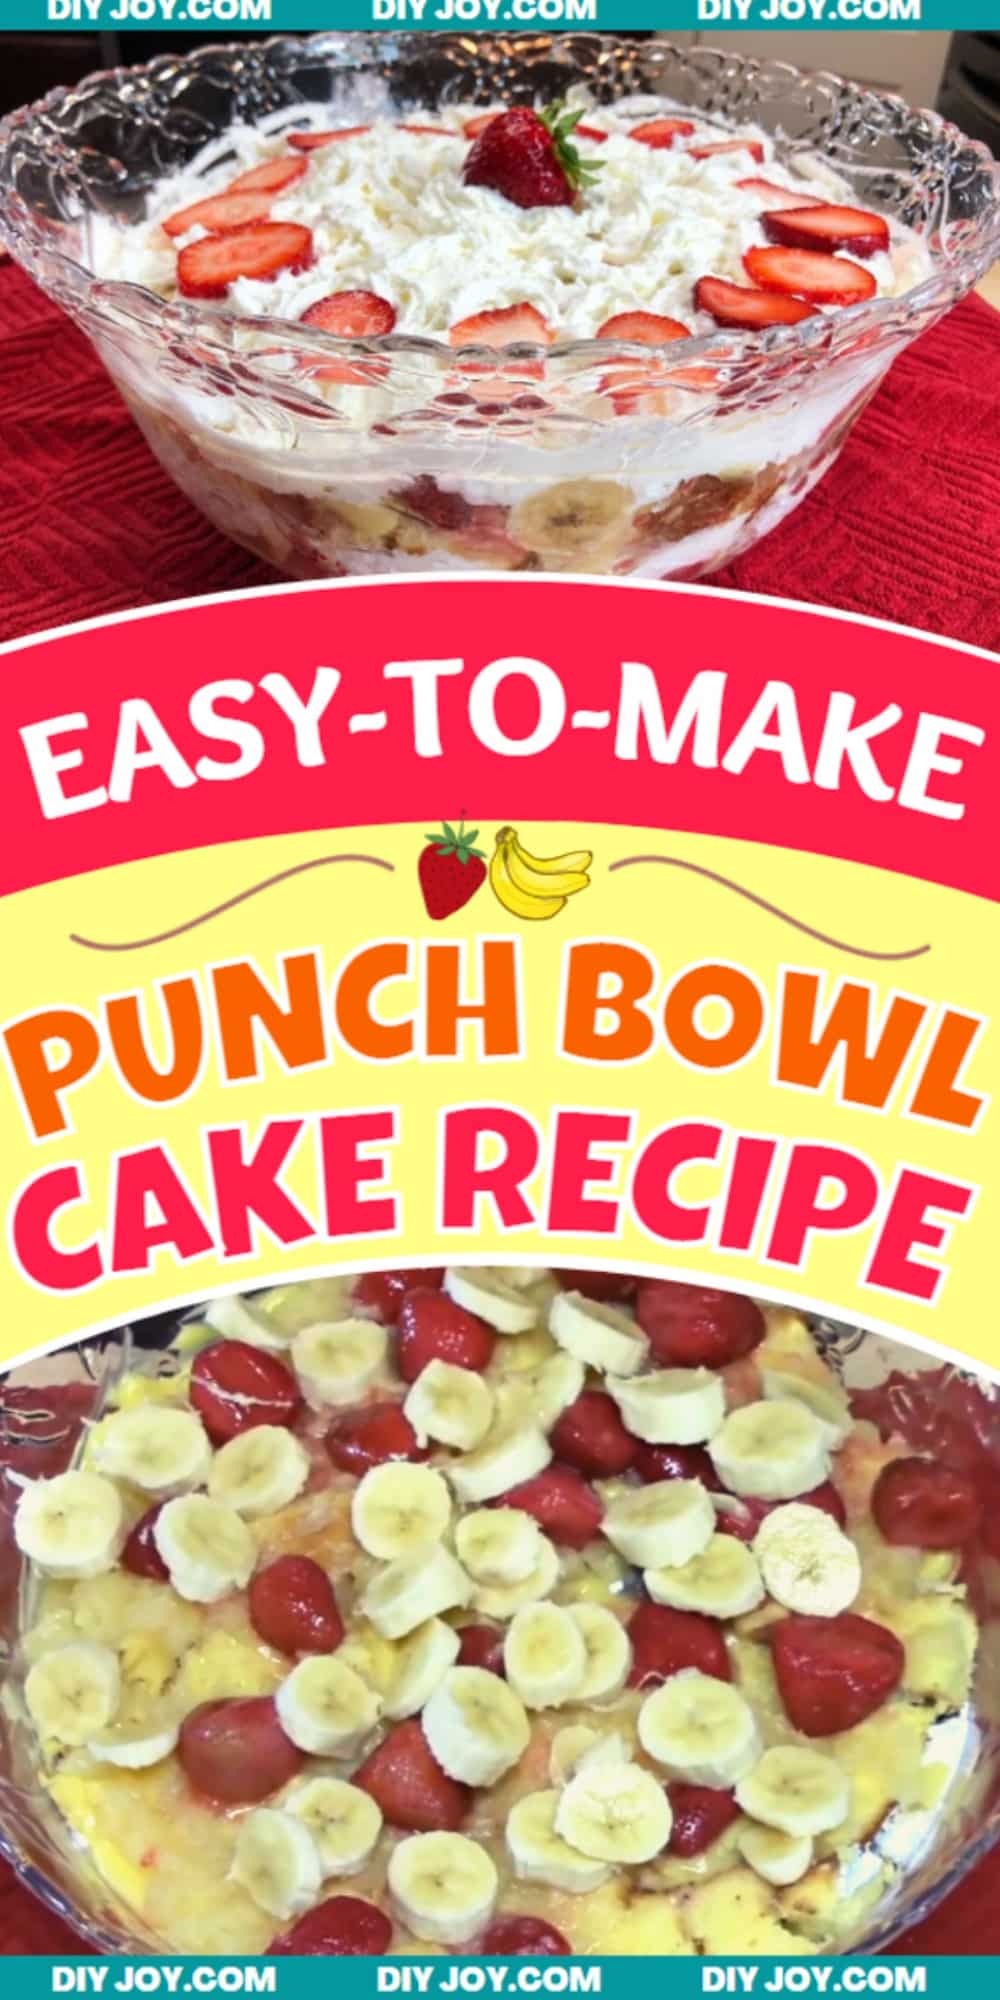 Easy Punch Bowl Cake Recipe